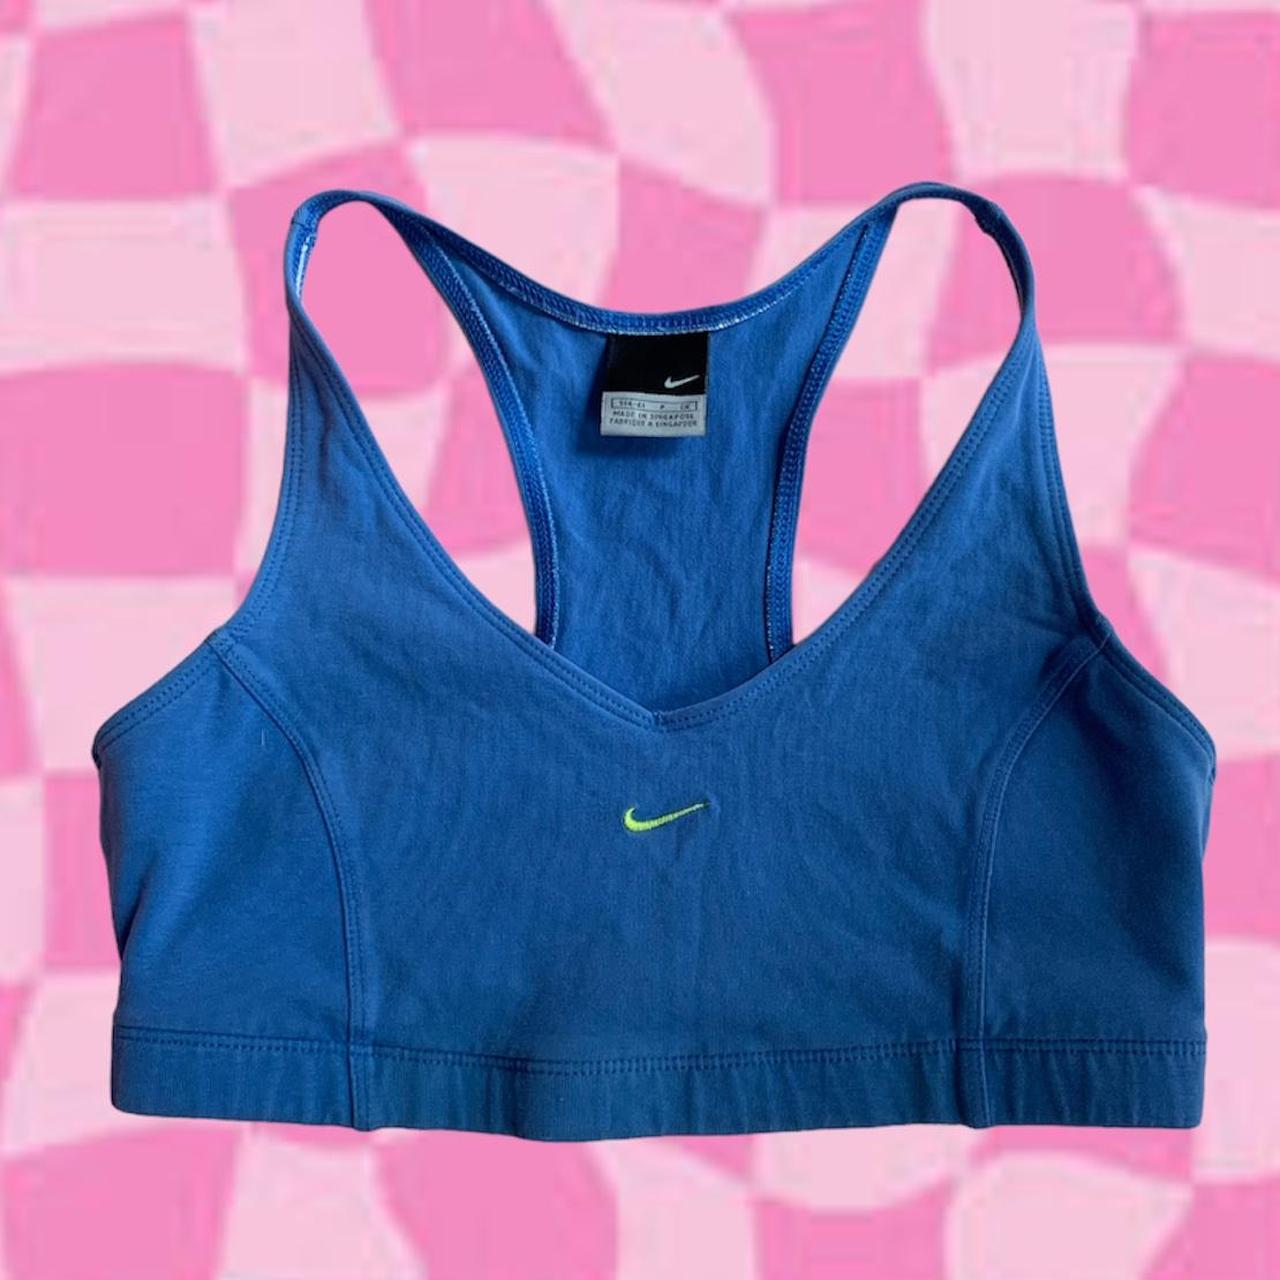 Zone Pro women's sport bra Activewear Multicolor - Depop